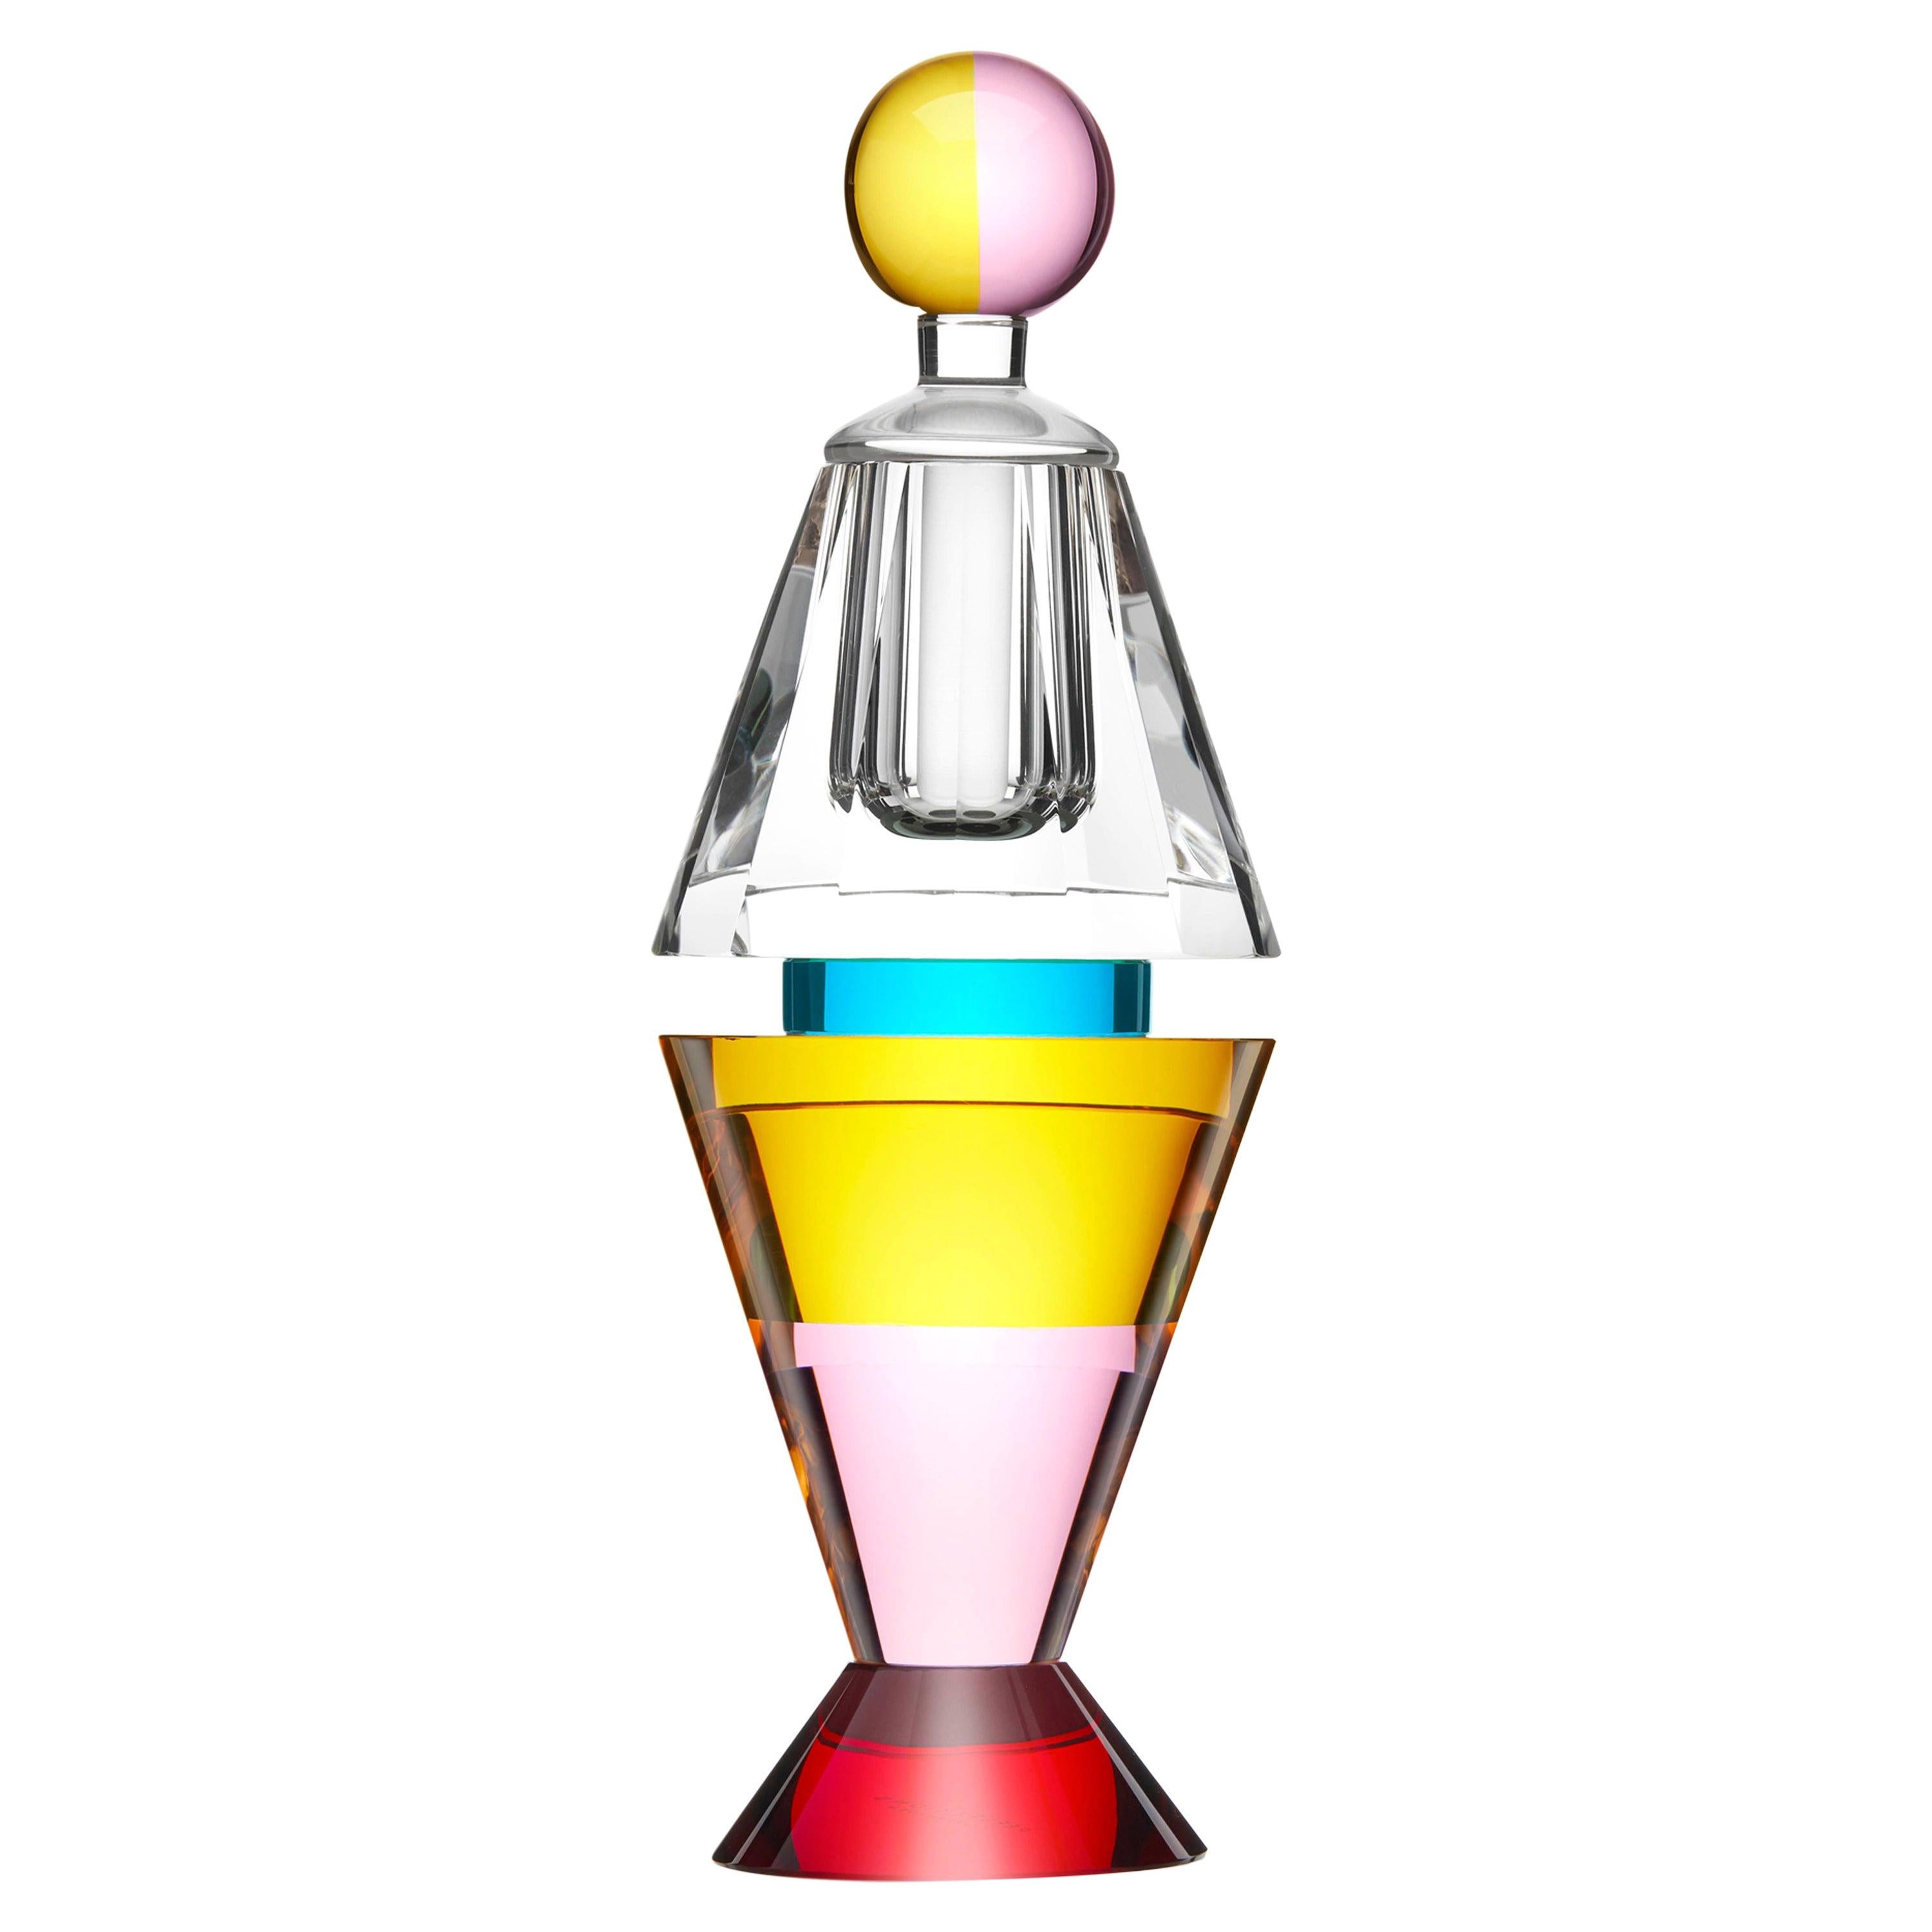 Grand Lauderdale Perfume Flacon, Extravagant Grand Crystal Perfume Flacons For Sale